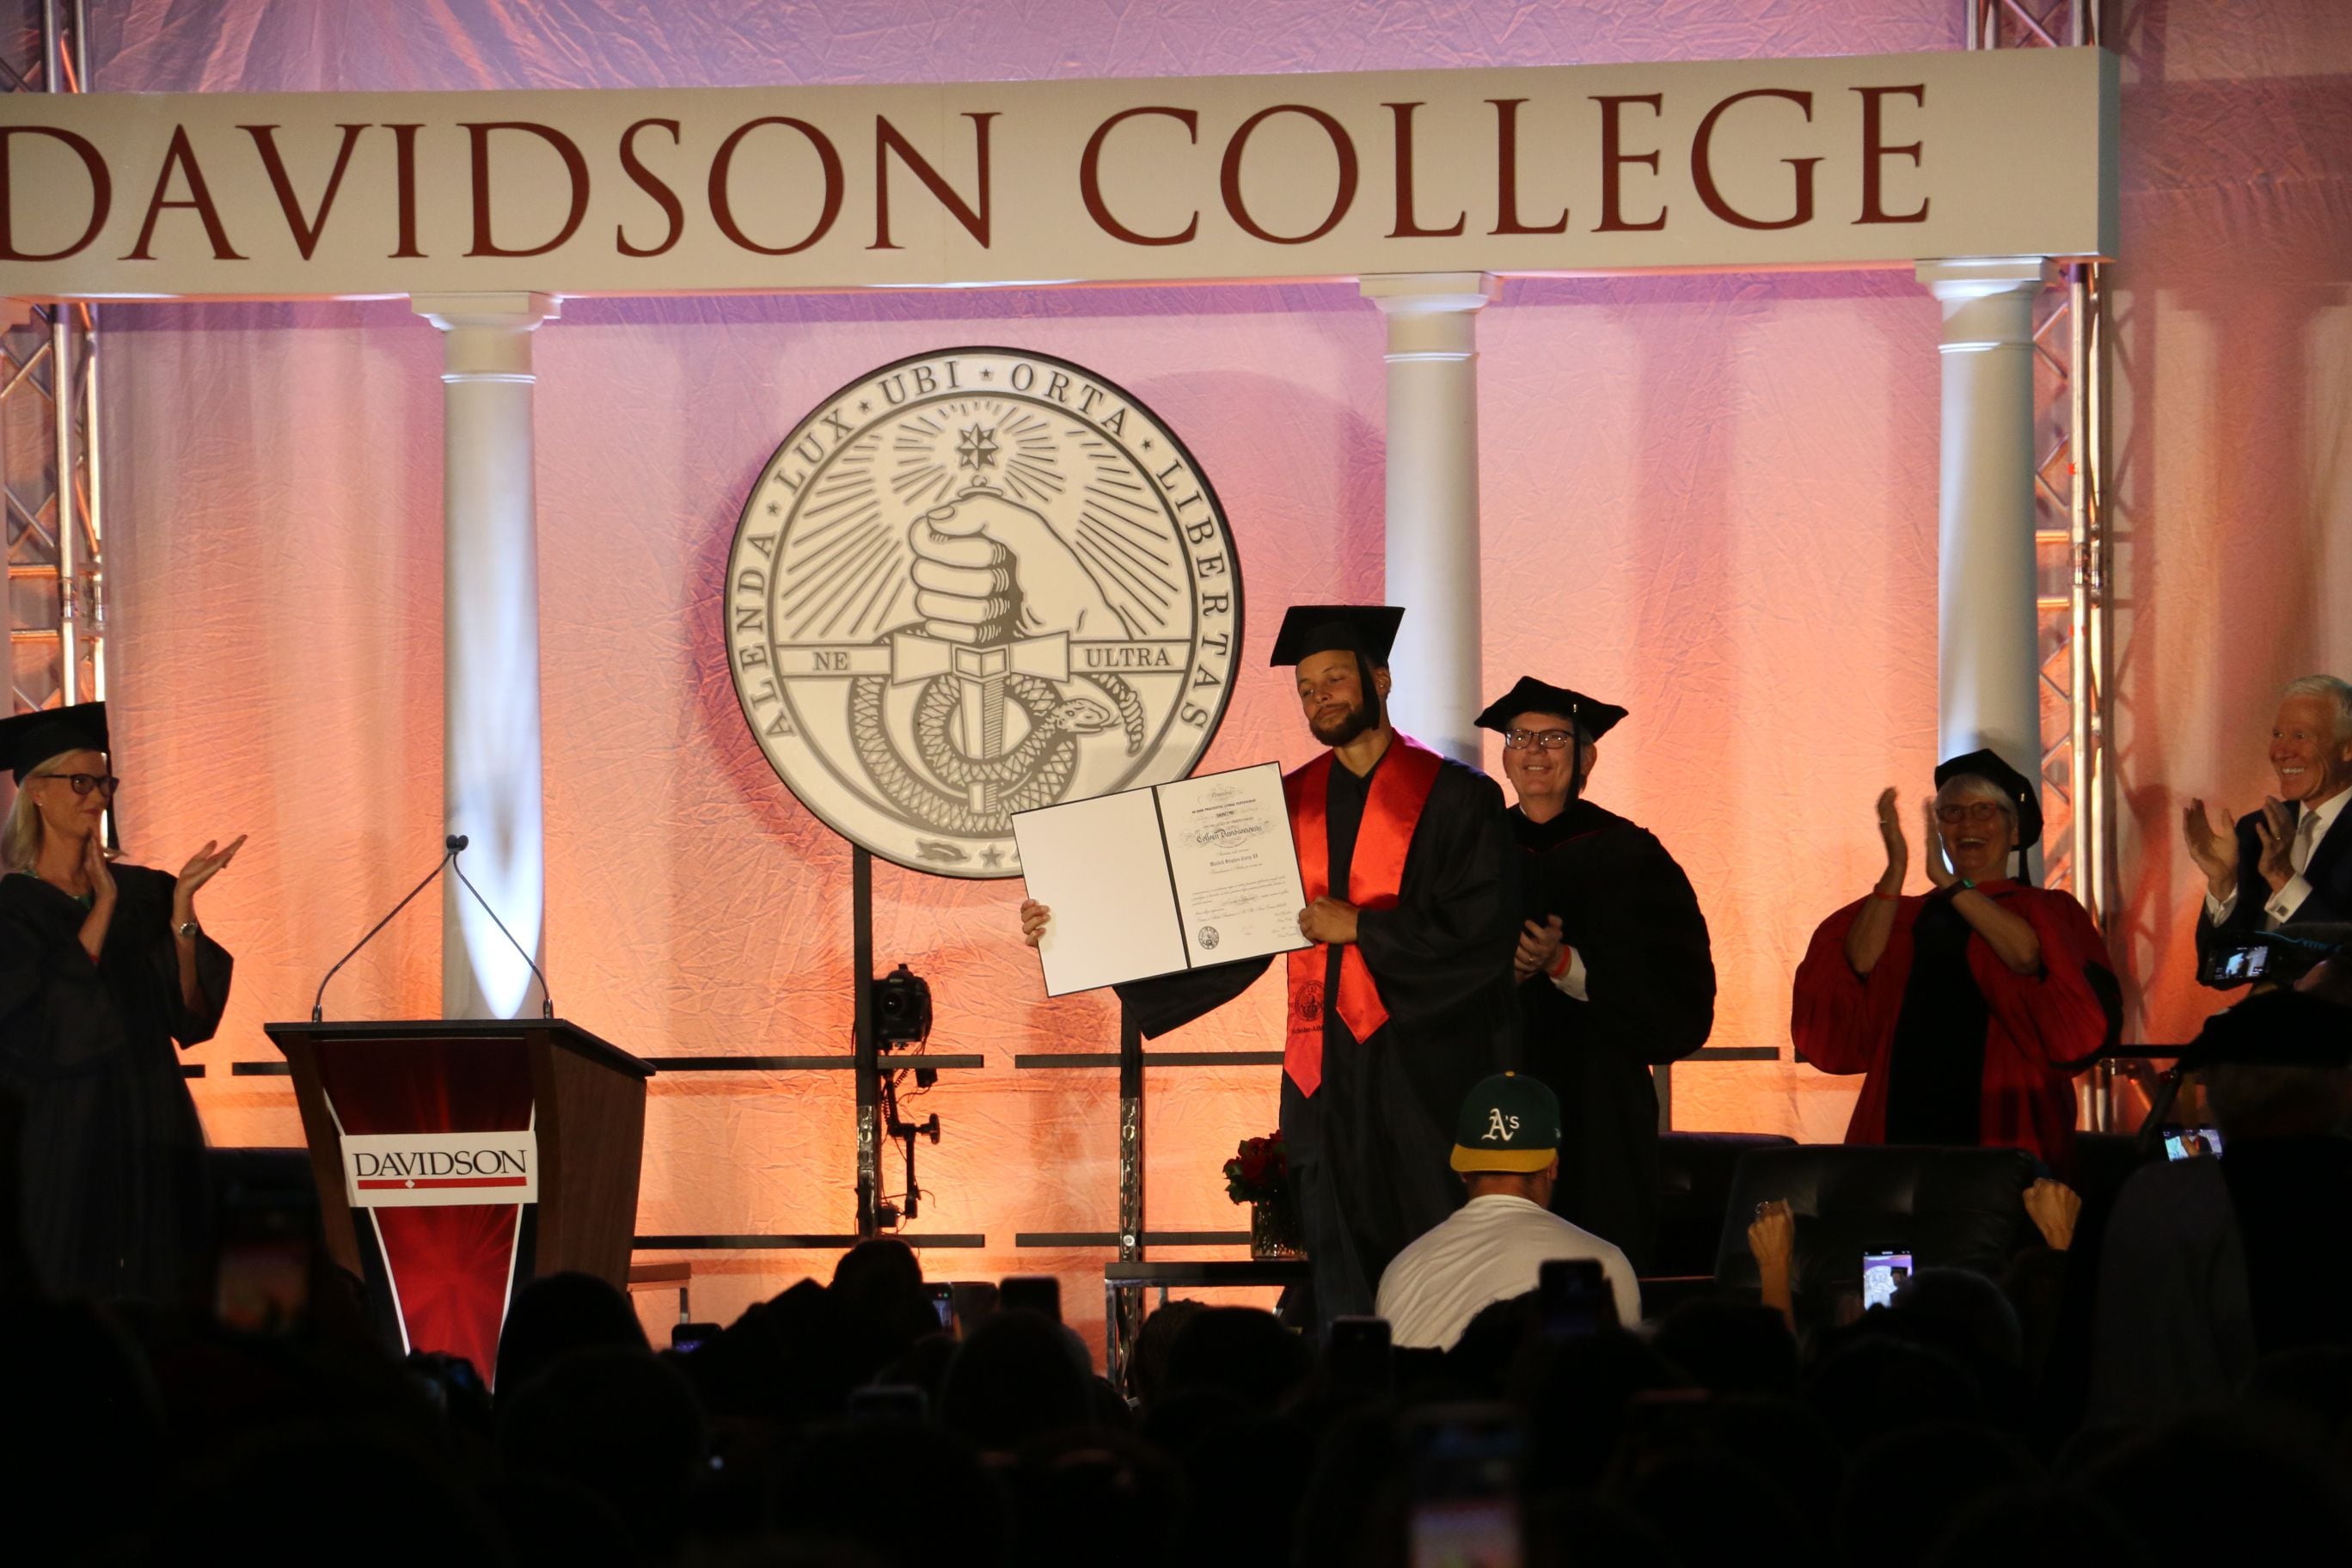 Steph Curry graduates, Davidson College retires jersey